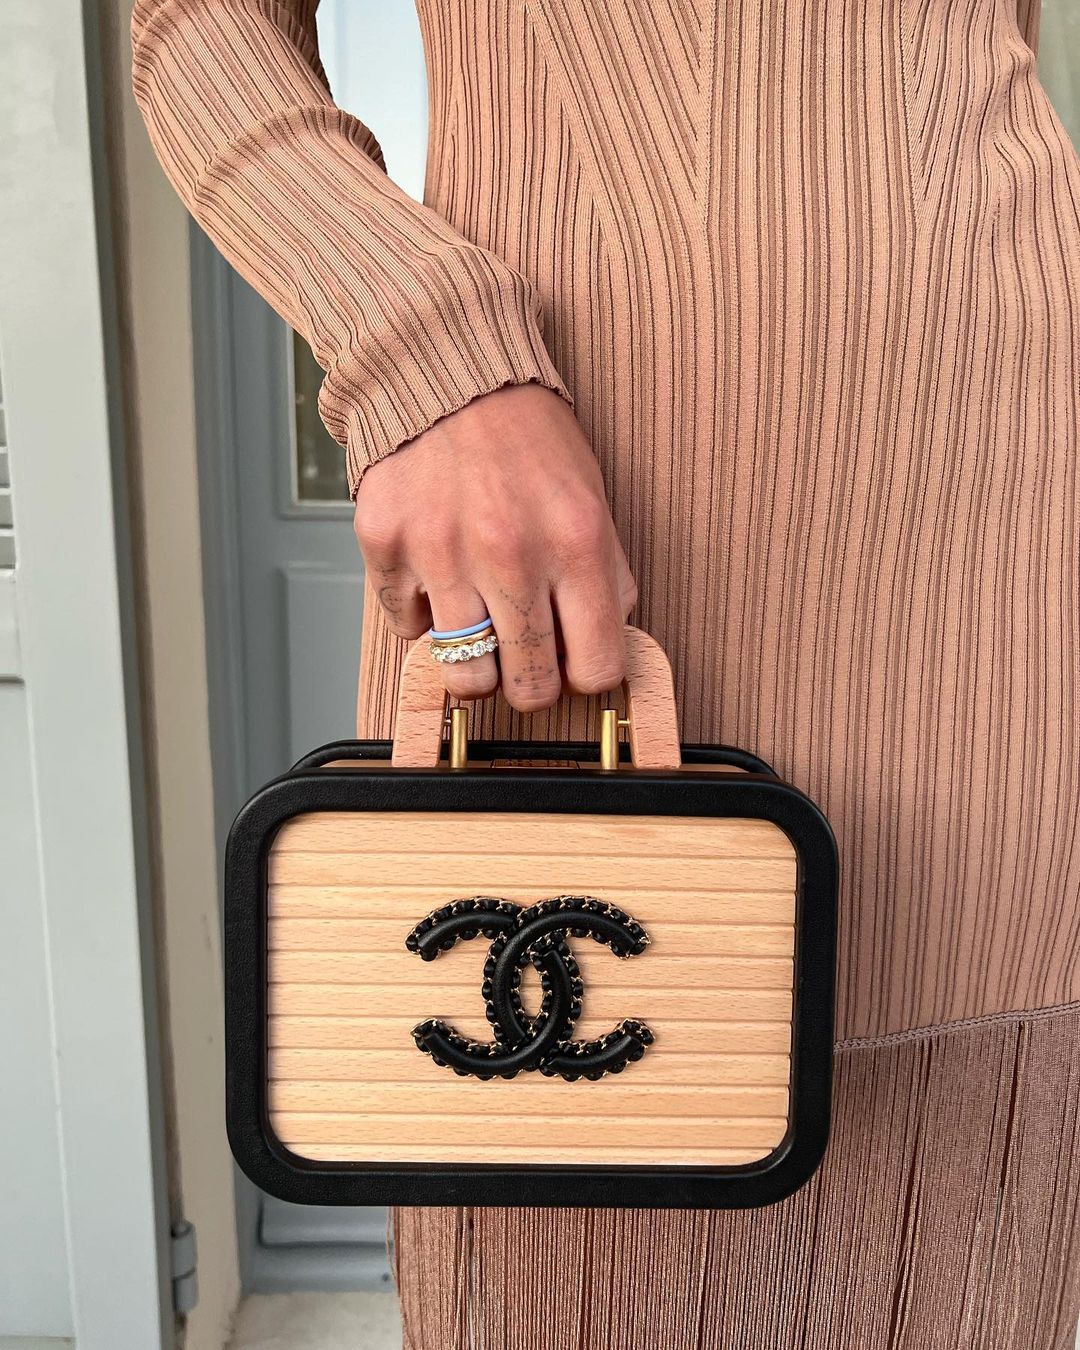 This is the £1,910 'Quiet Luxury' handbag Sofia Richie wears on repeat